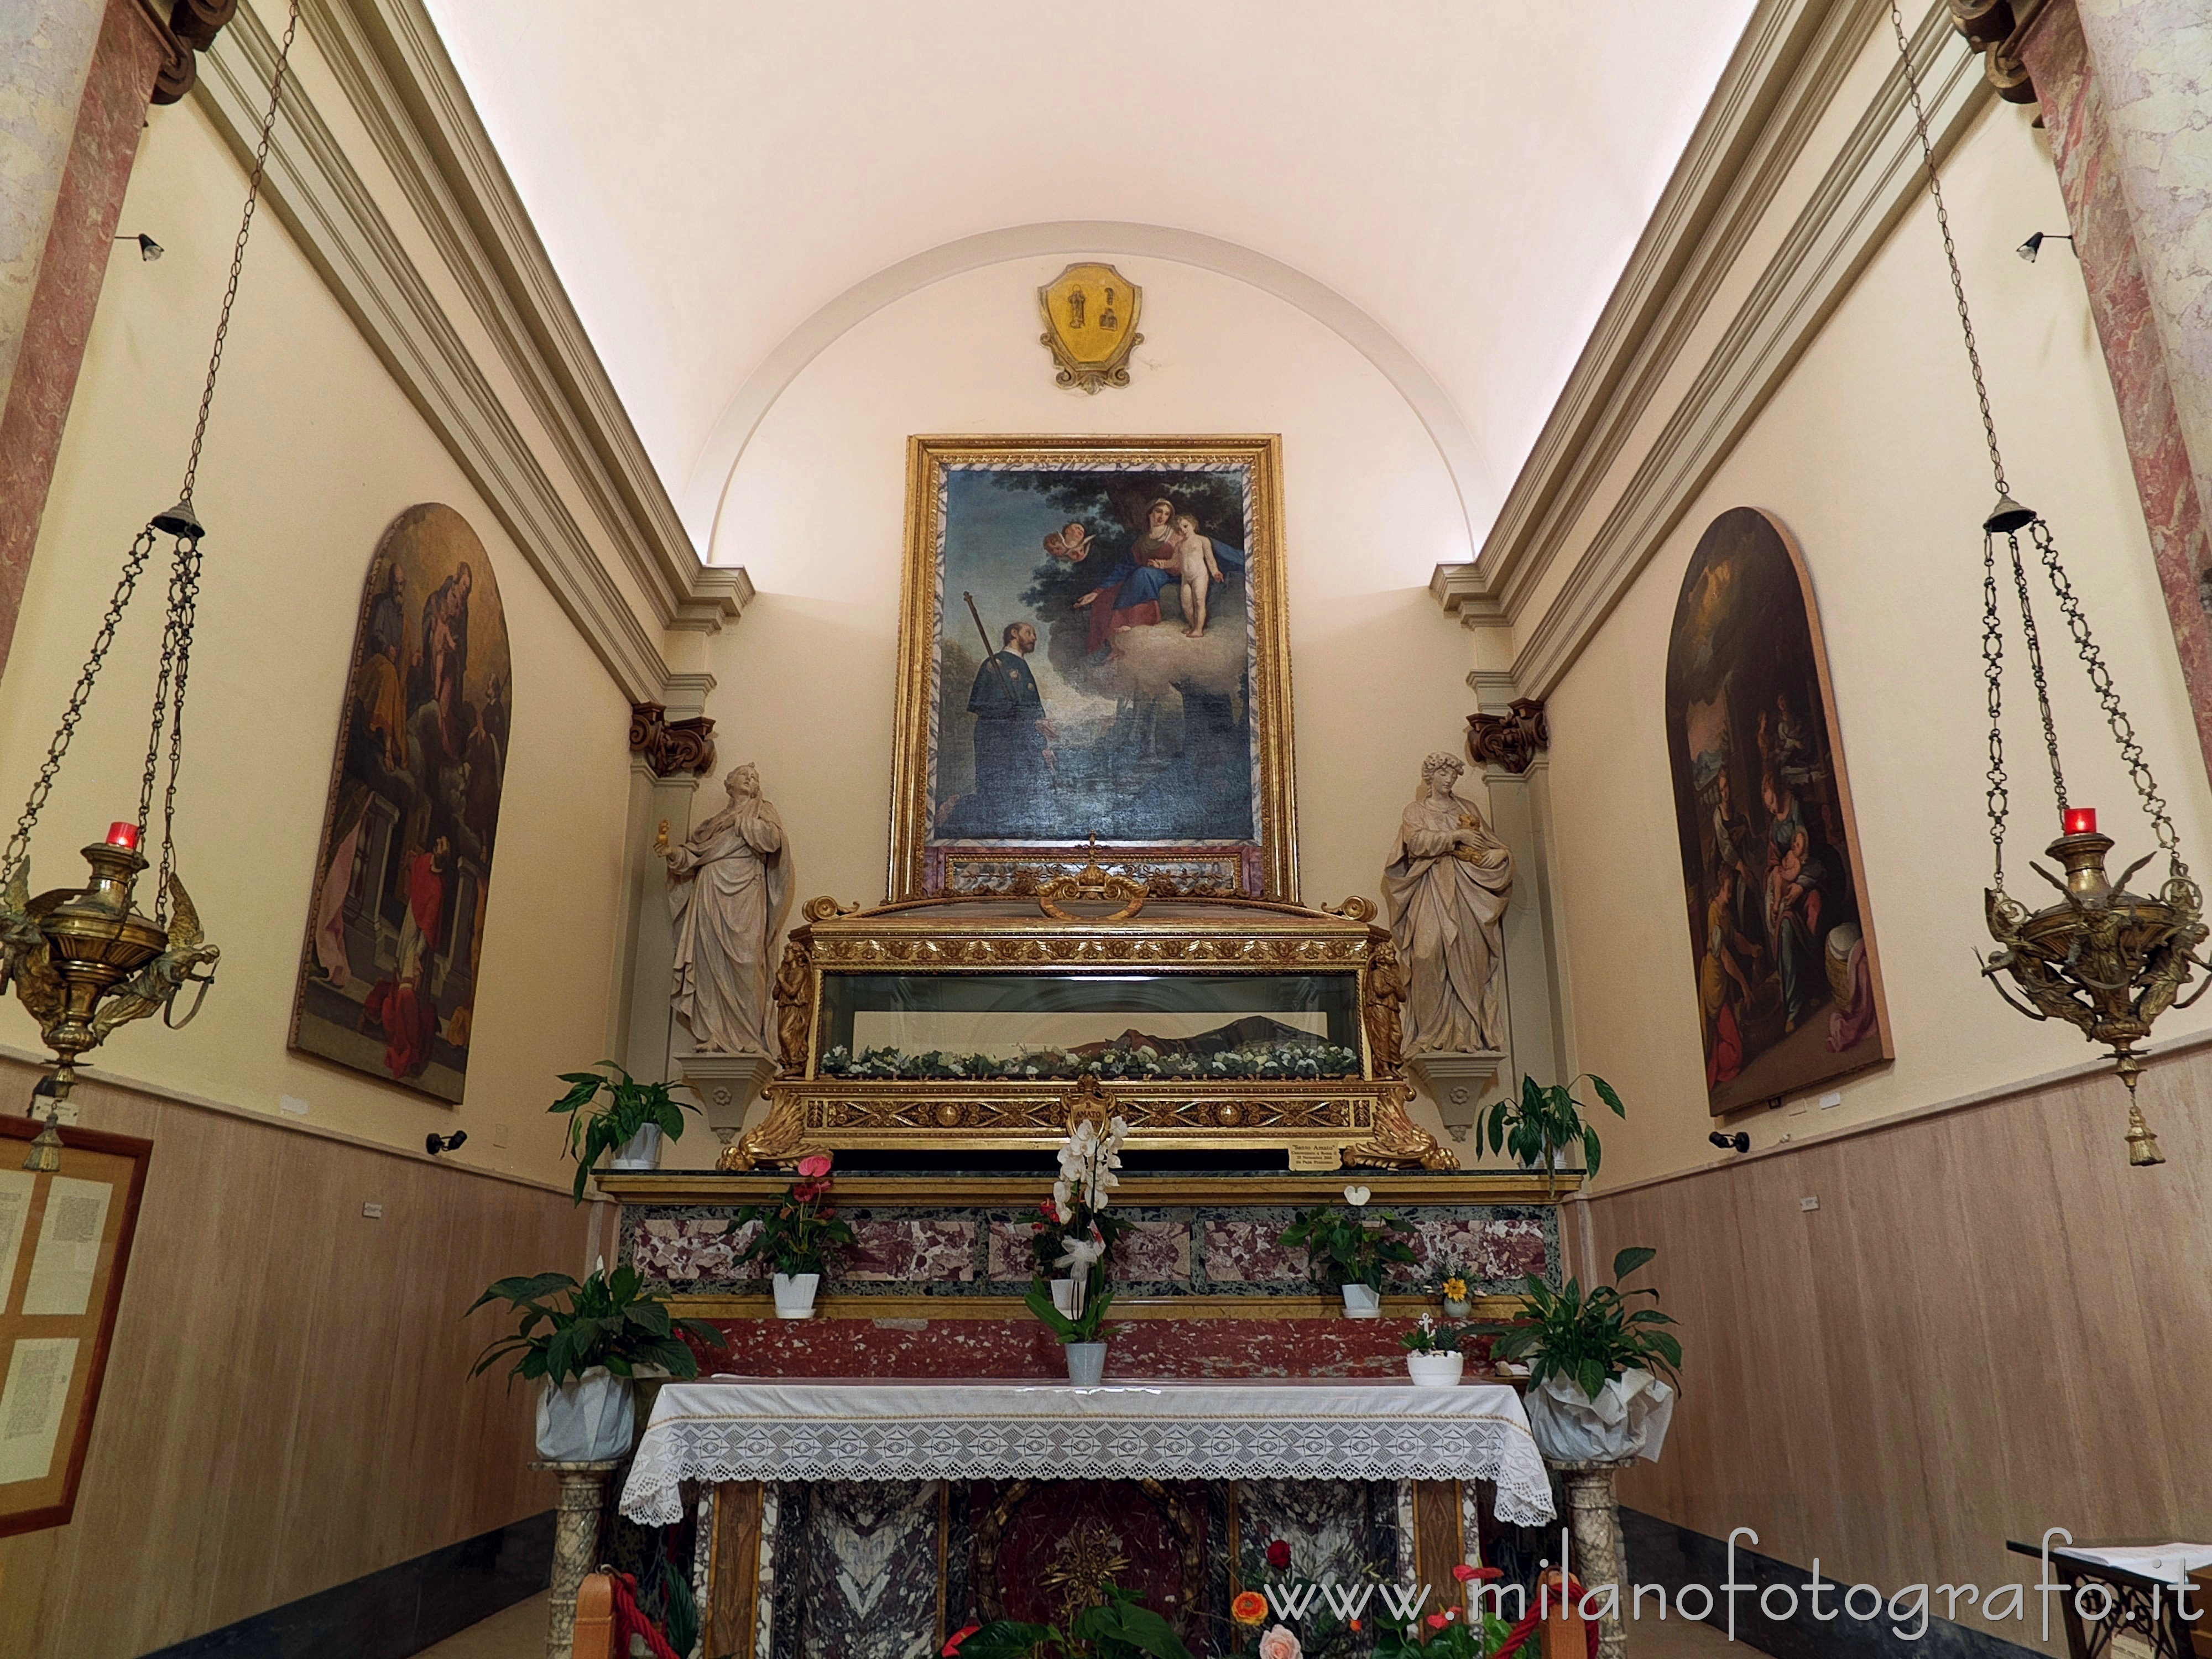 Saludecio (Rimini, Italy): Chapel of the Blessed Amato in the Church of San Biagio - Saludecio (Rimini, Italy)